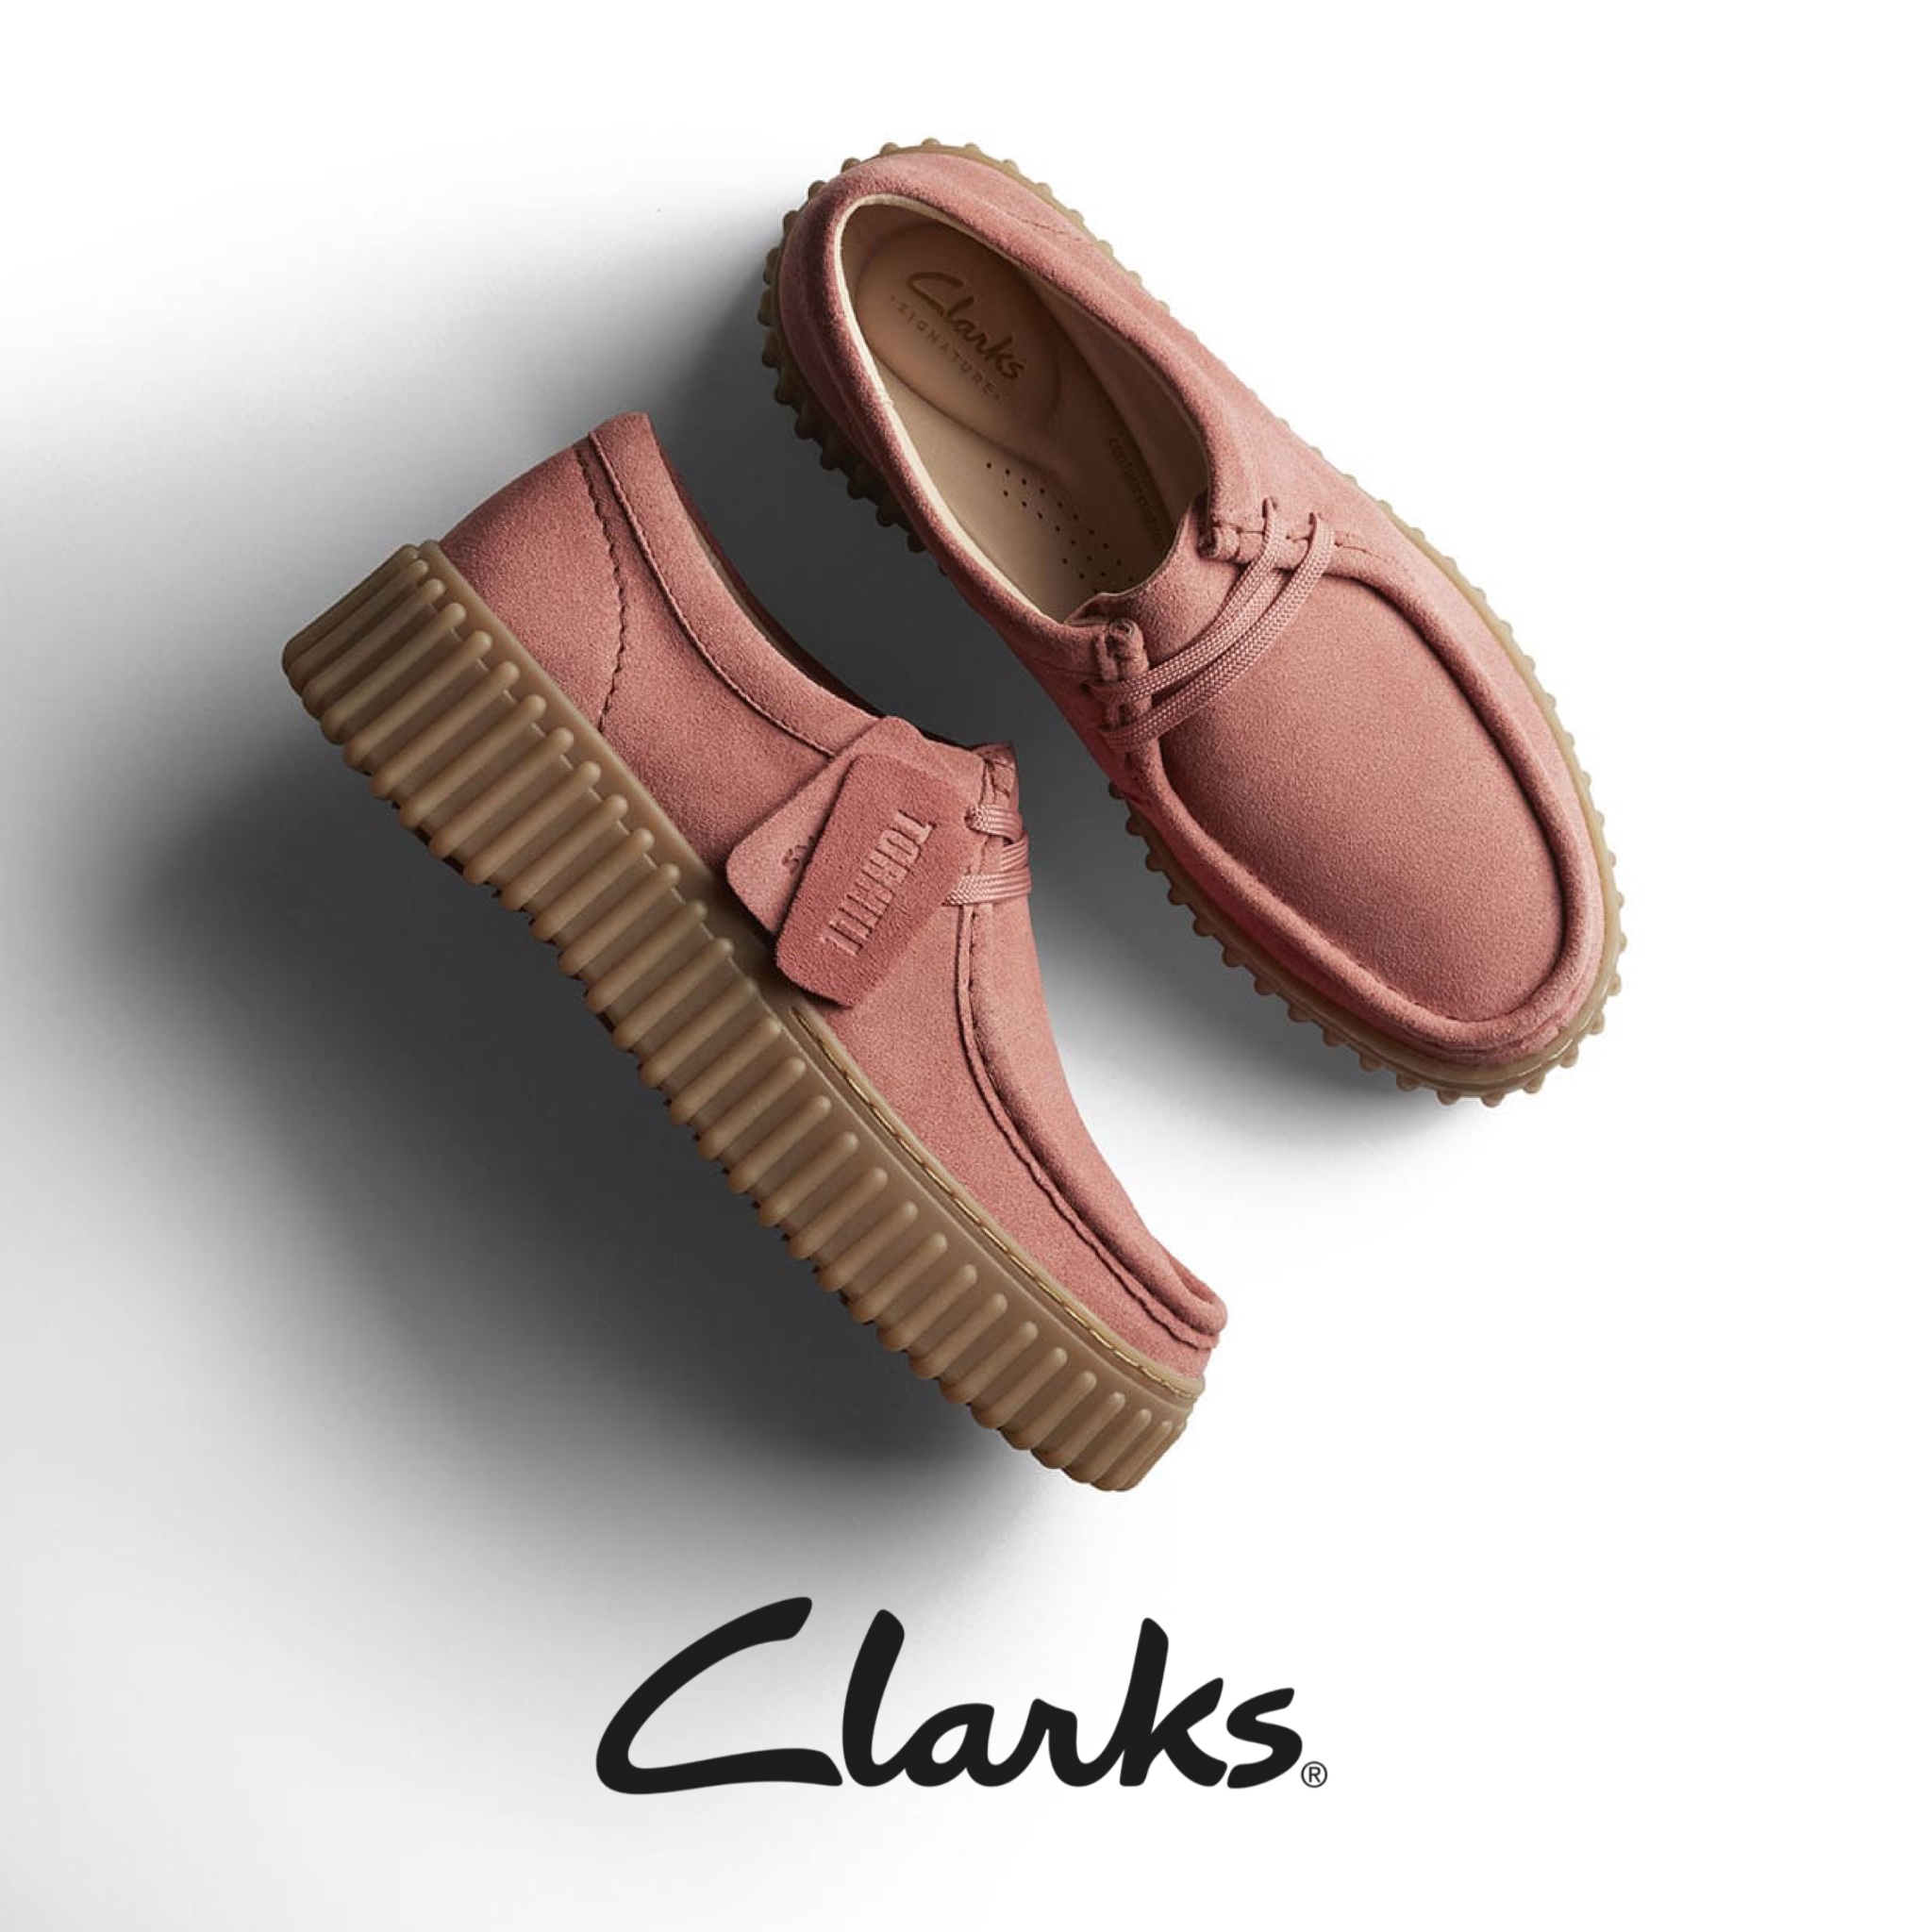 Clarks brand